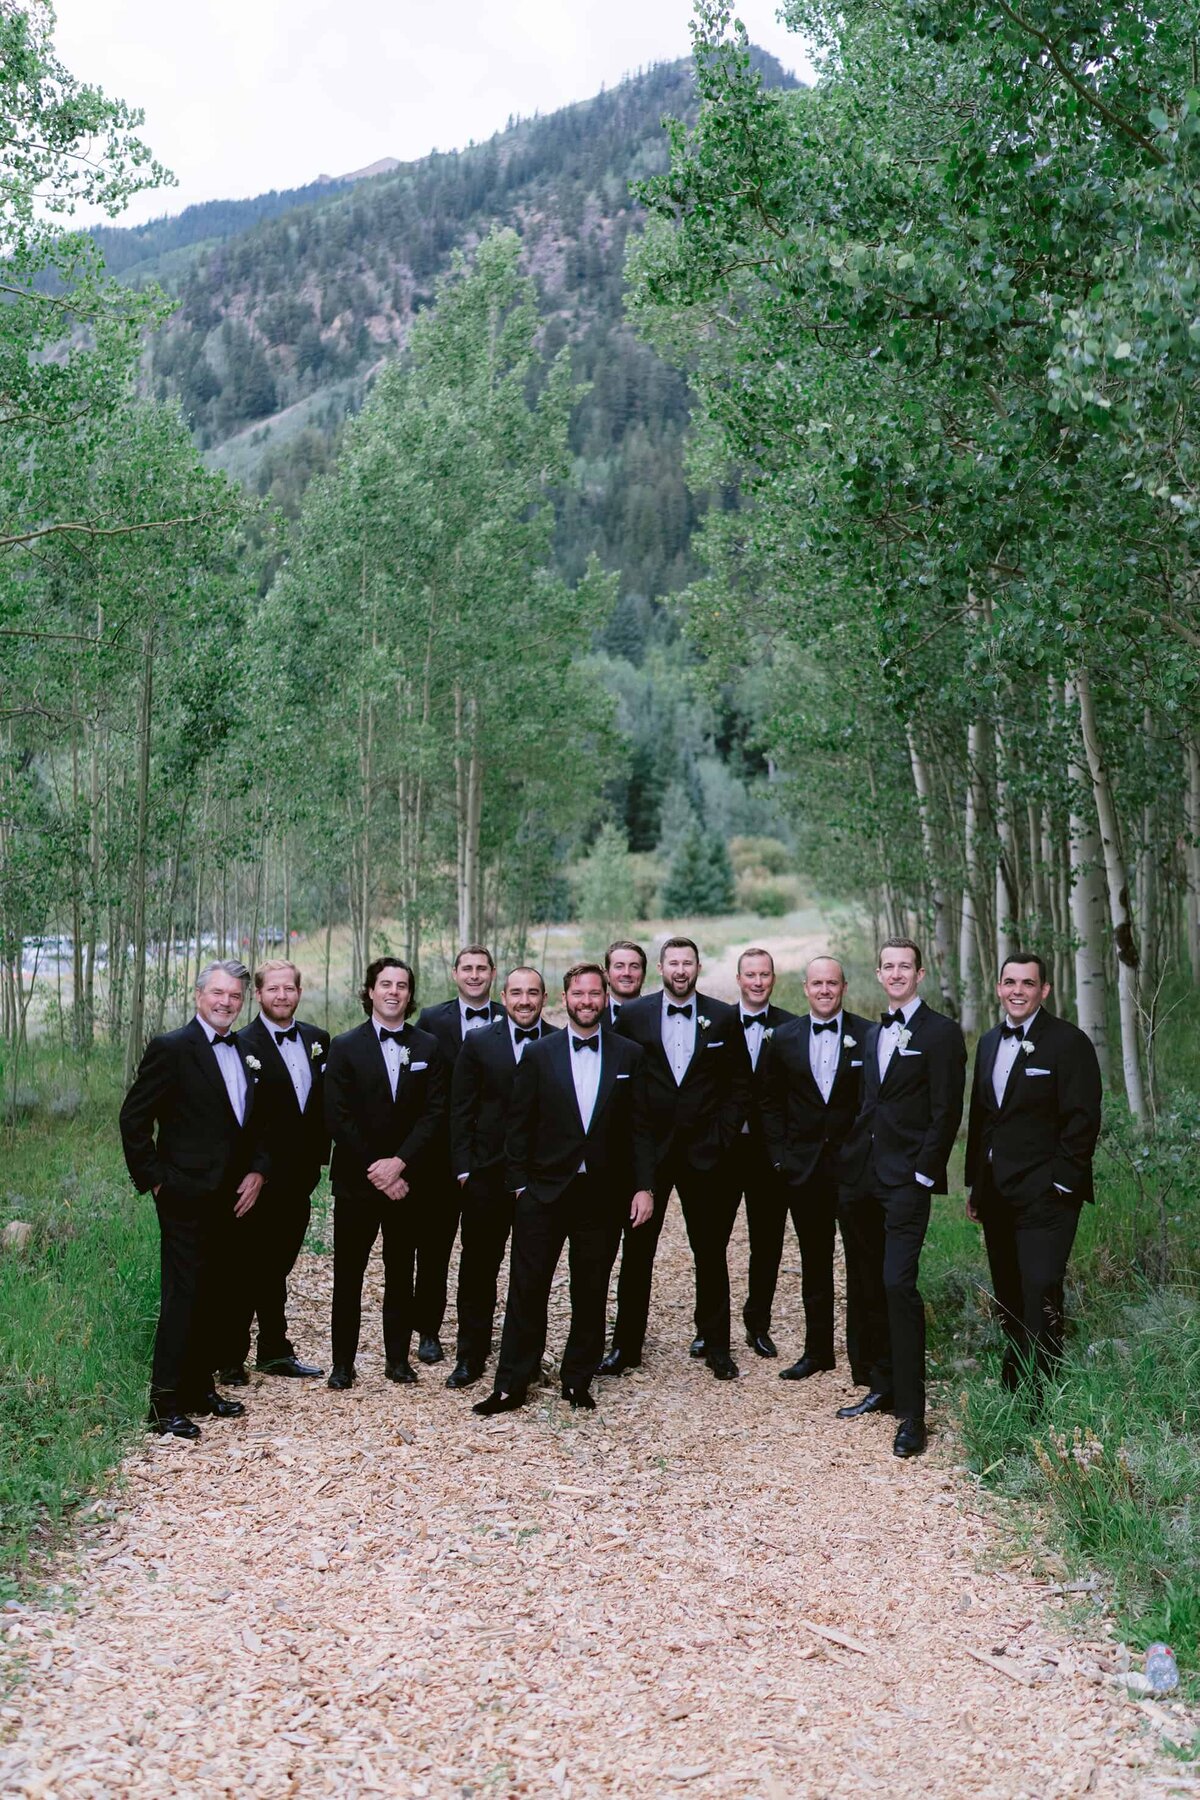 Groom and groomsmen in black tuxedos at a custom wedding in Aspen Colorado